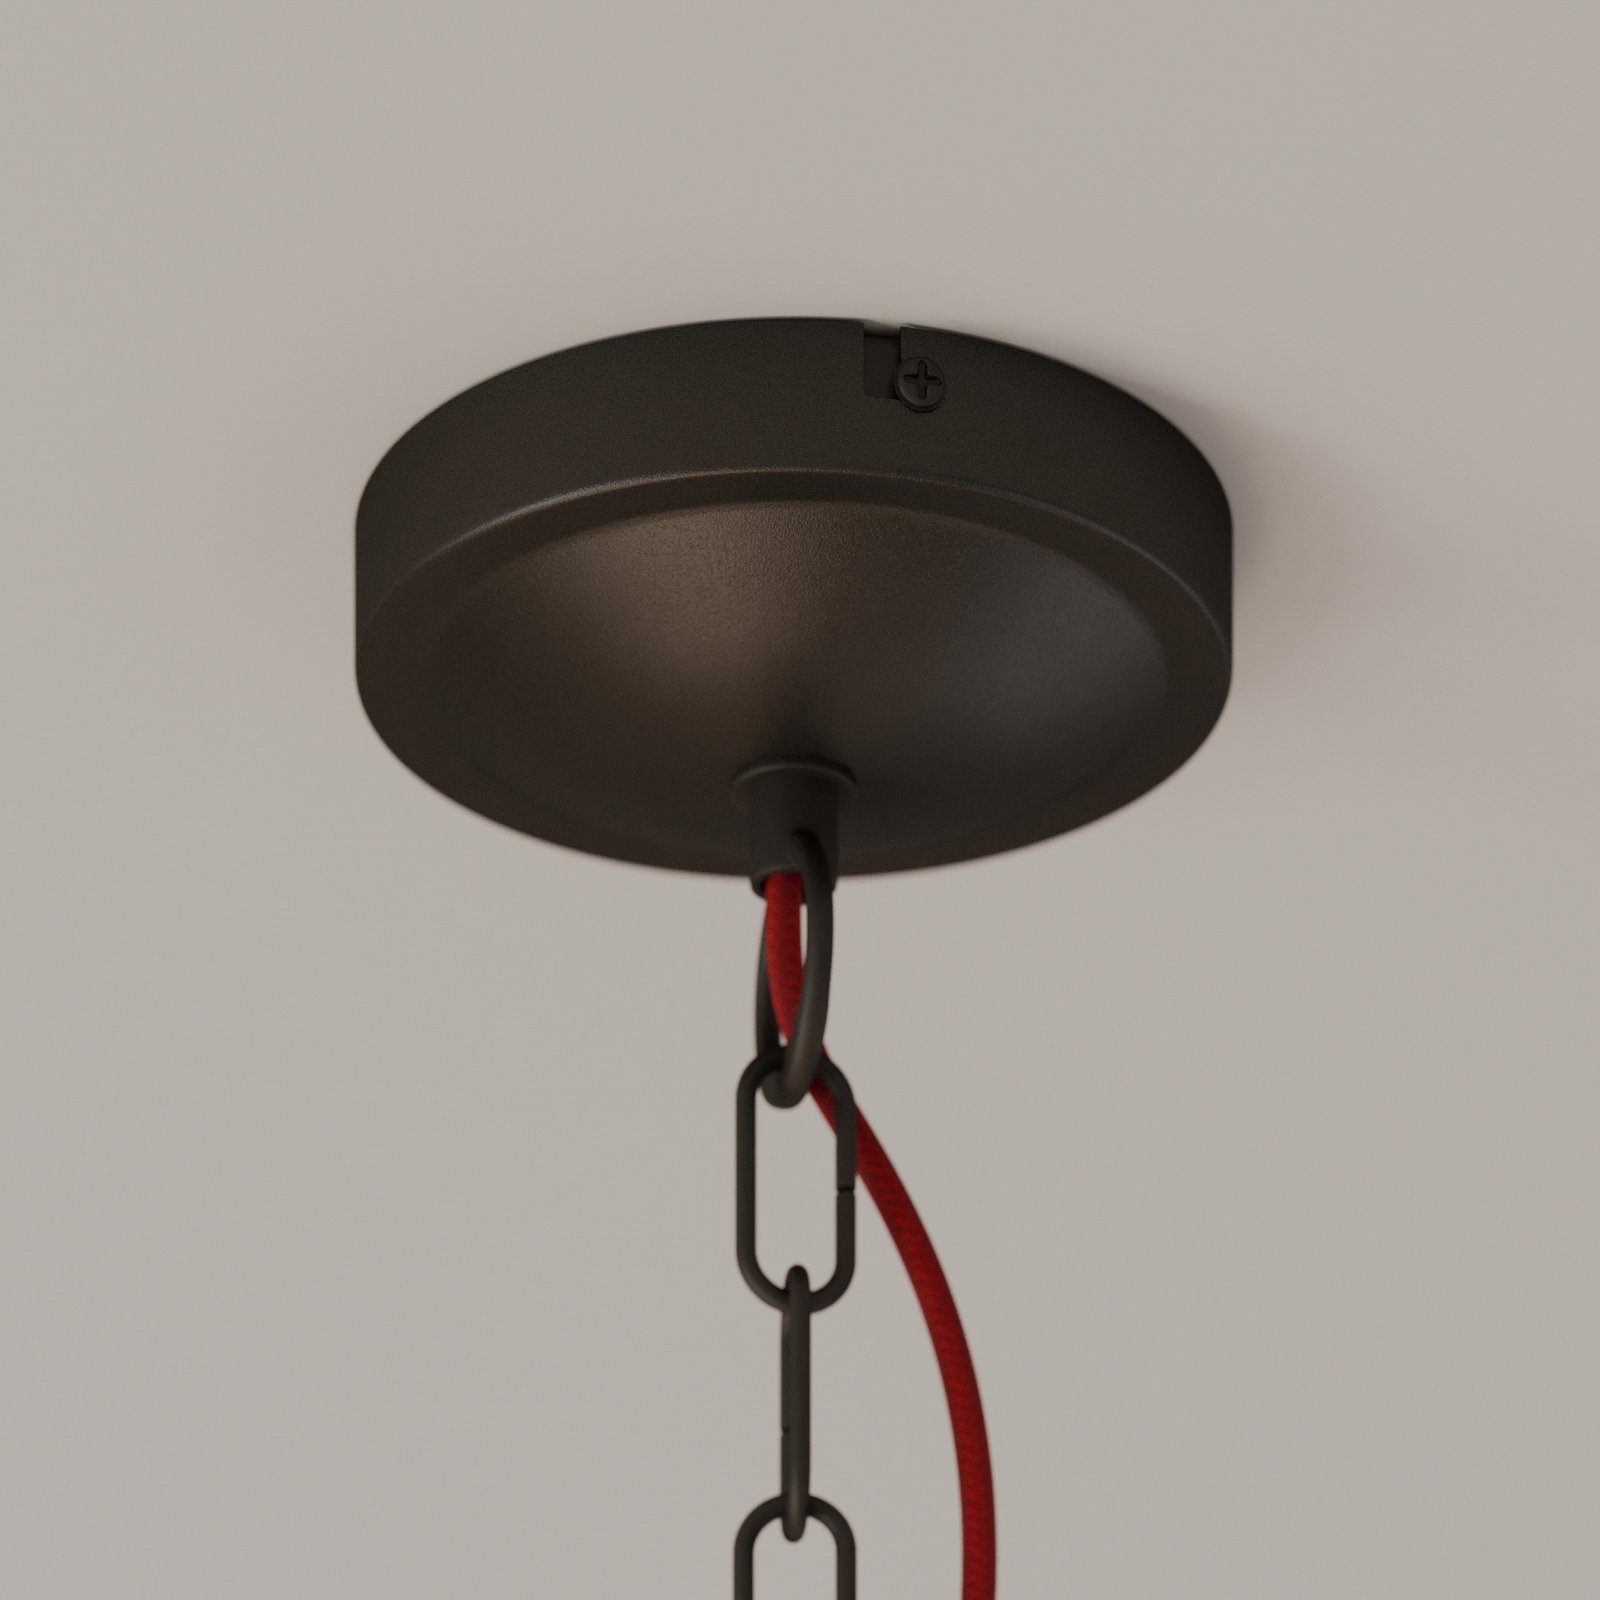 Lucande Jorna lámpara colgante, 5 luces cable rojo